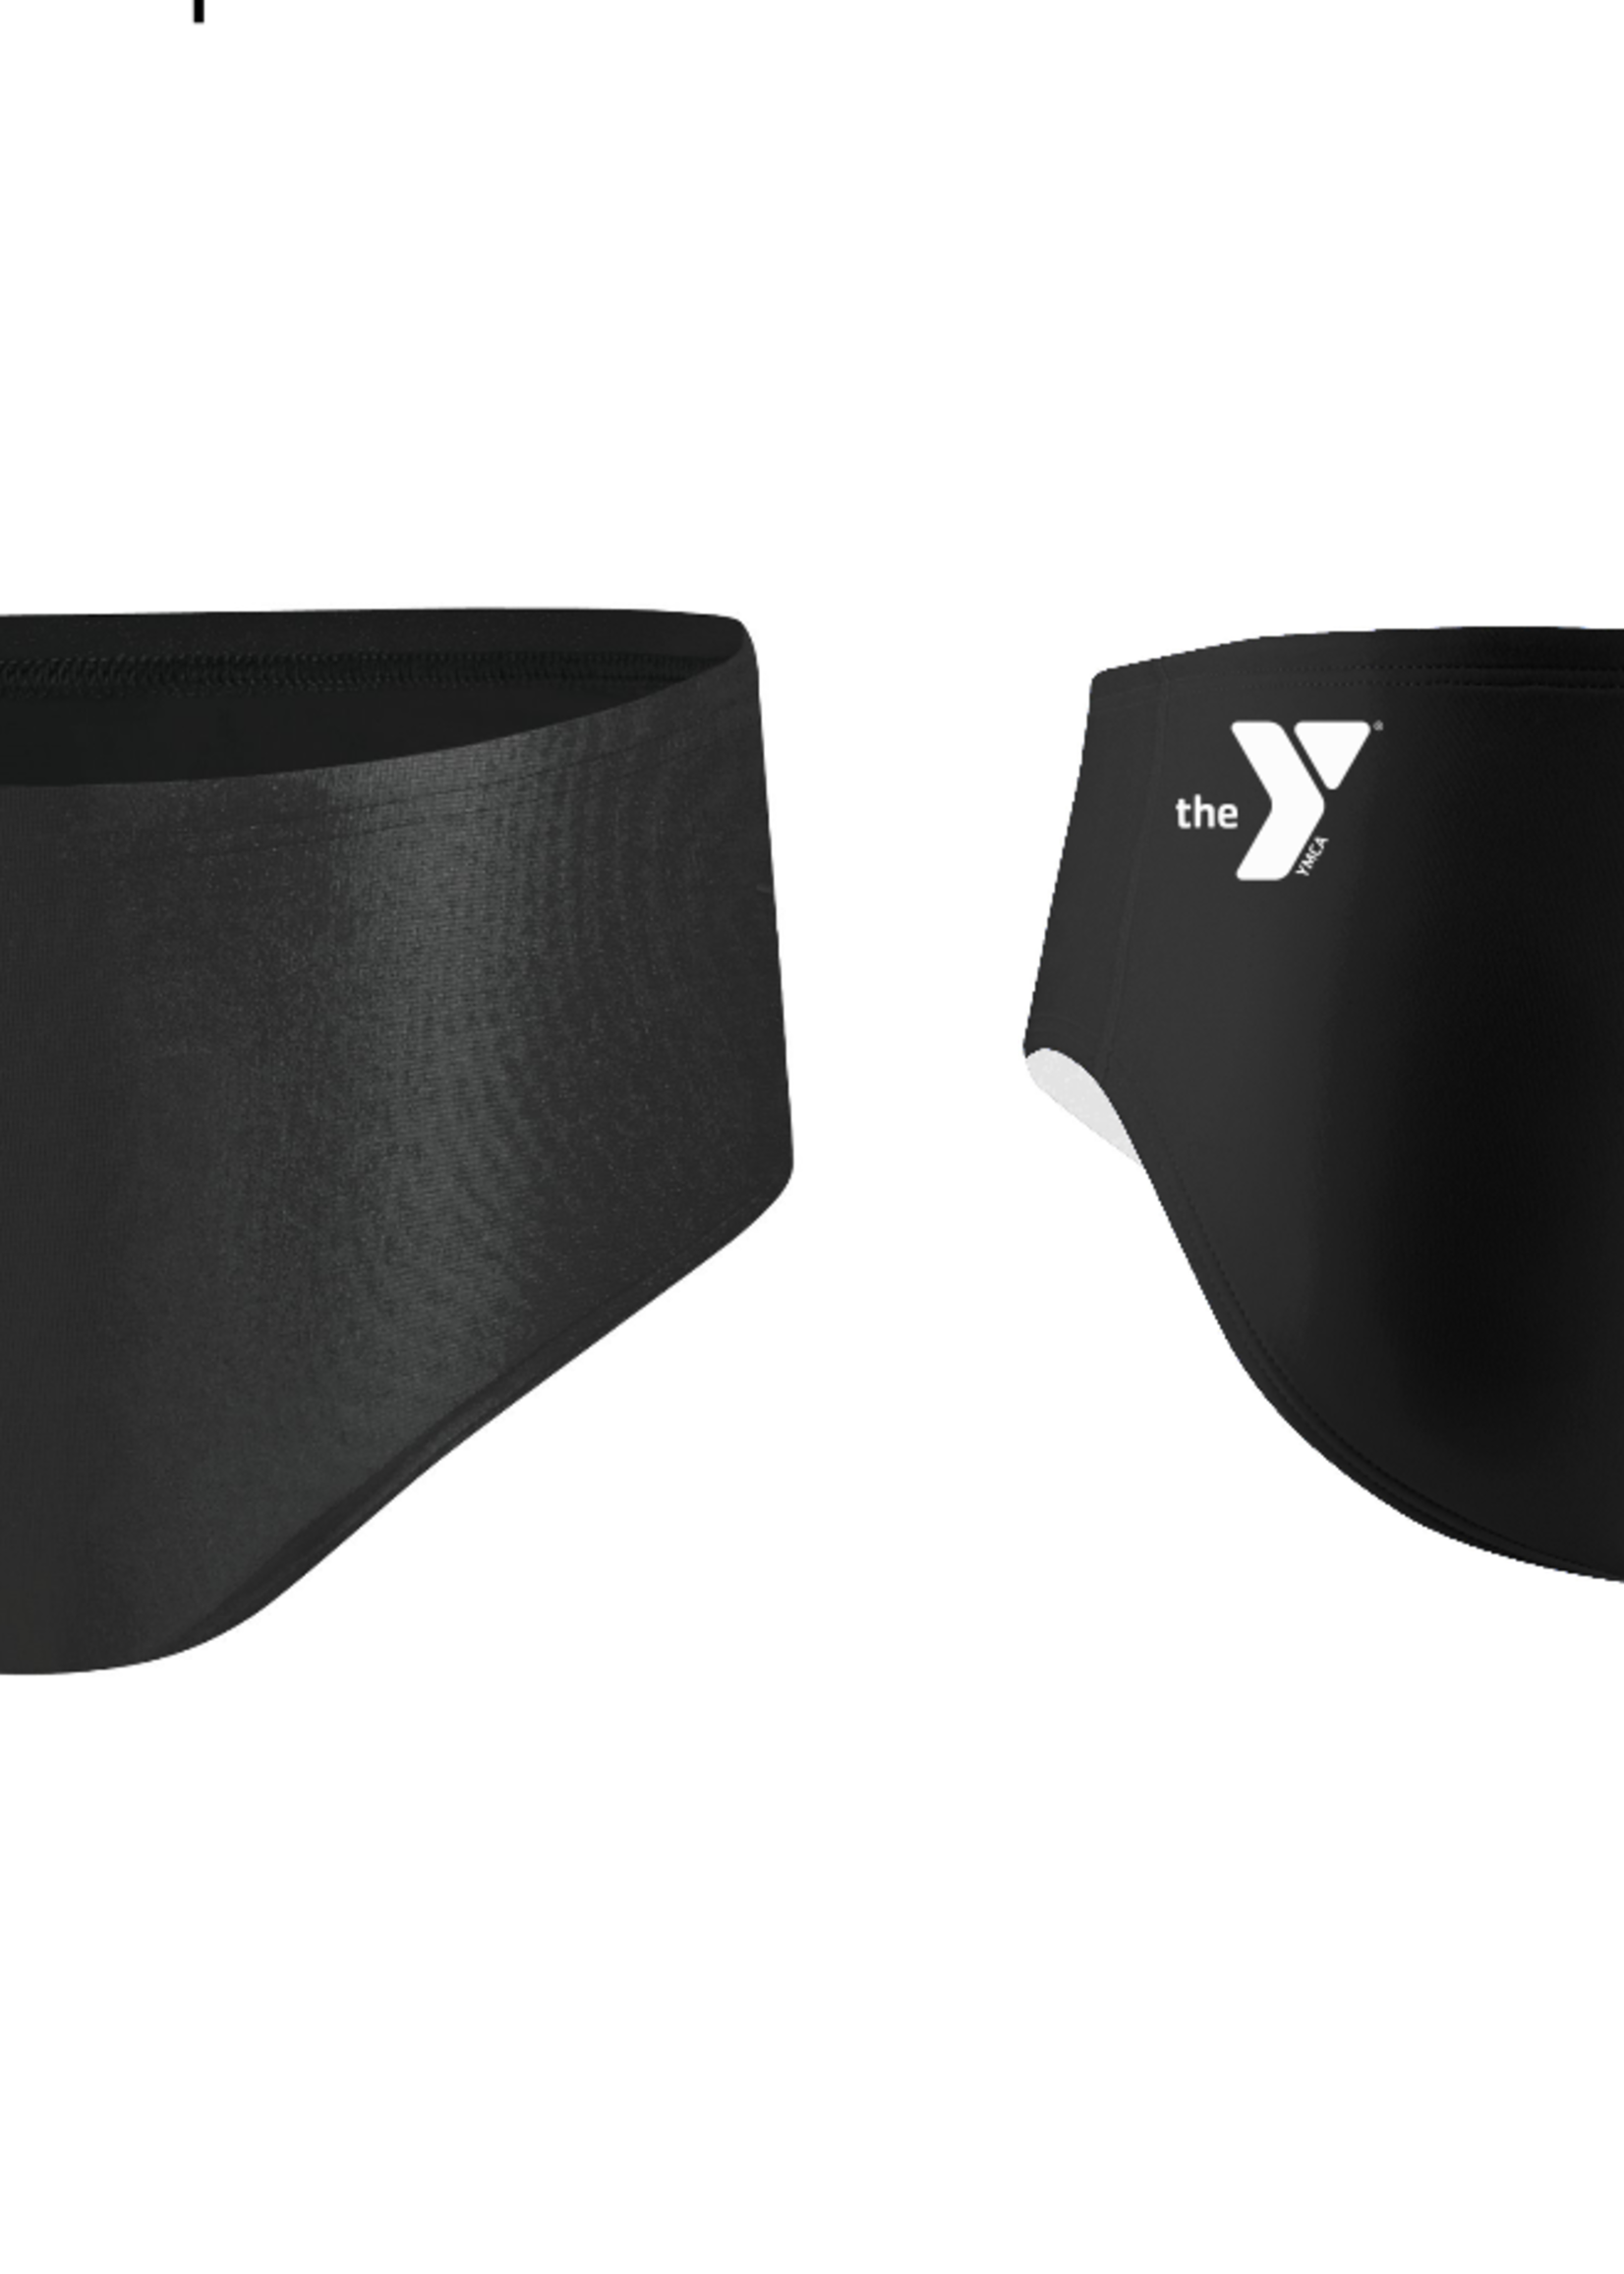 Ridgewood YMCA Suit Logo